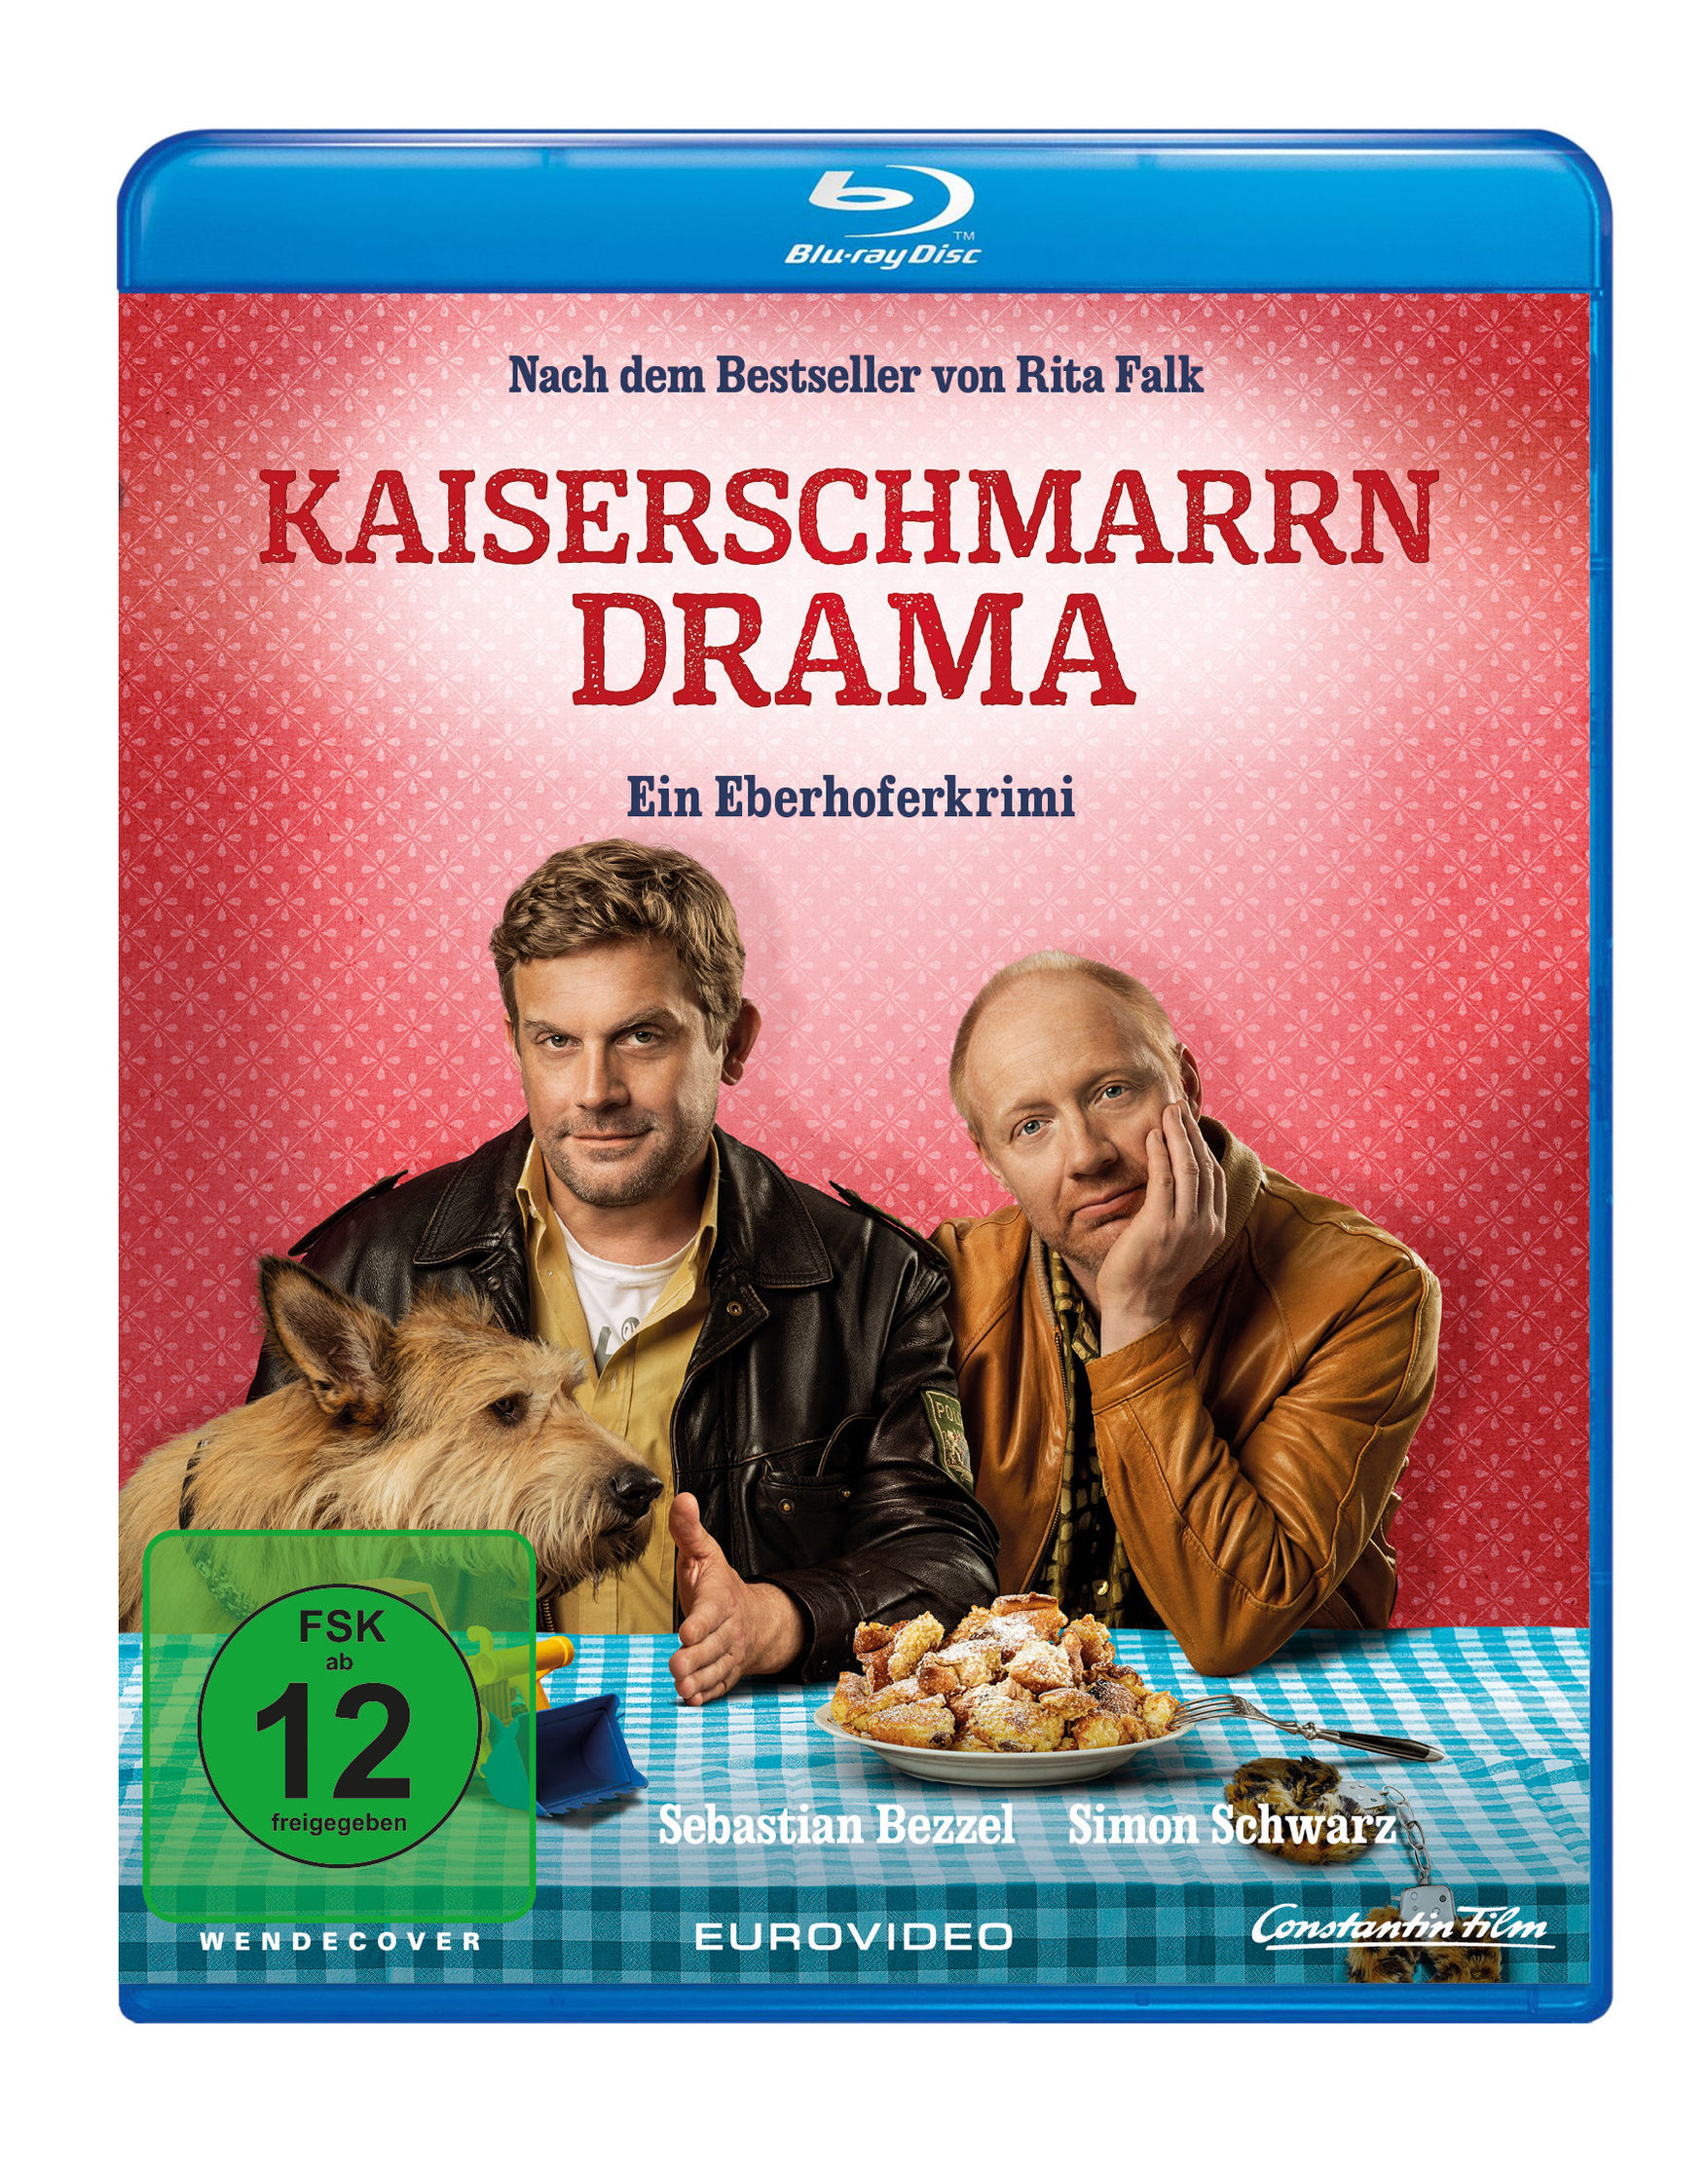 Kaiserschmarrndrama Blu-ray jetzt im Weltbild.de Shop bestellen